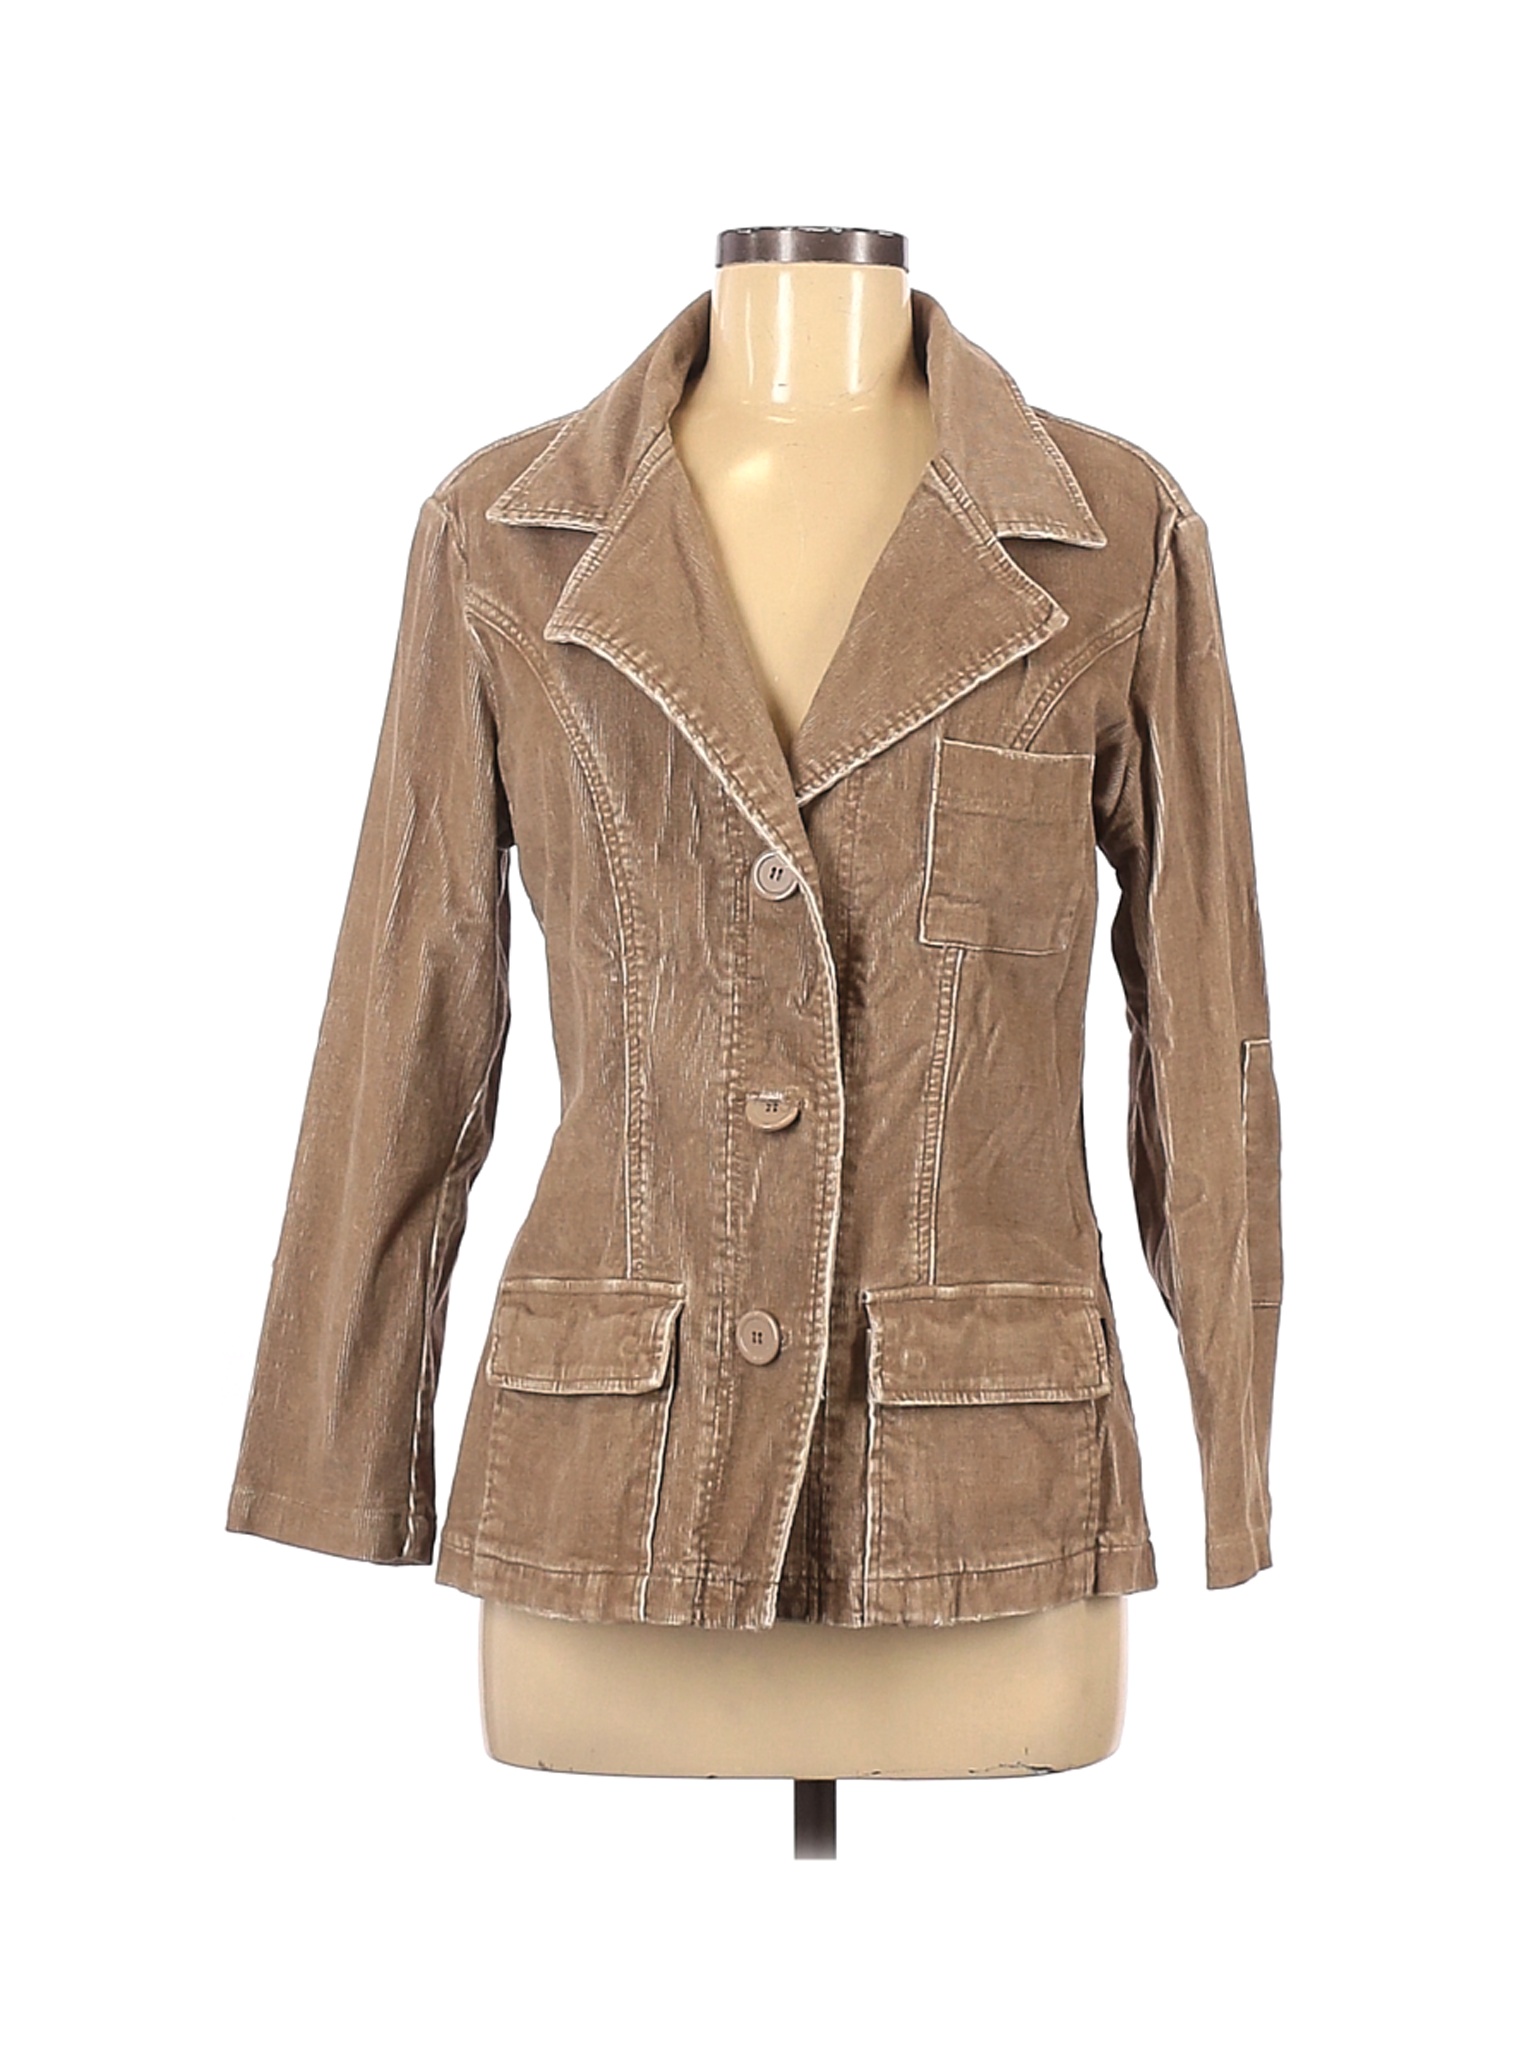 Z.Cavaricci Women Brown Jacket M | eBay